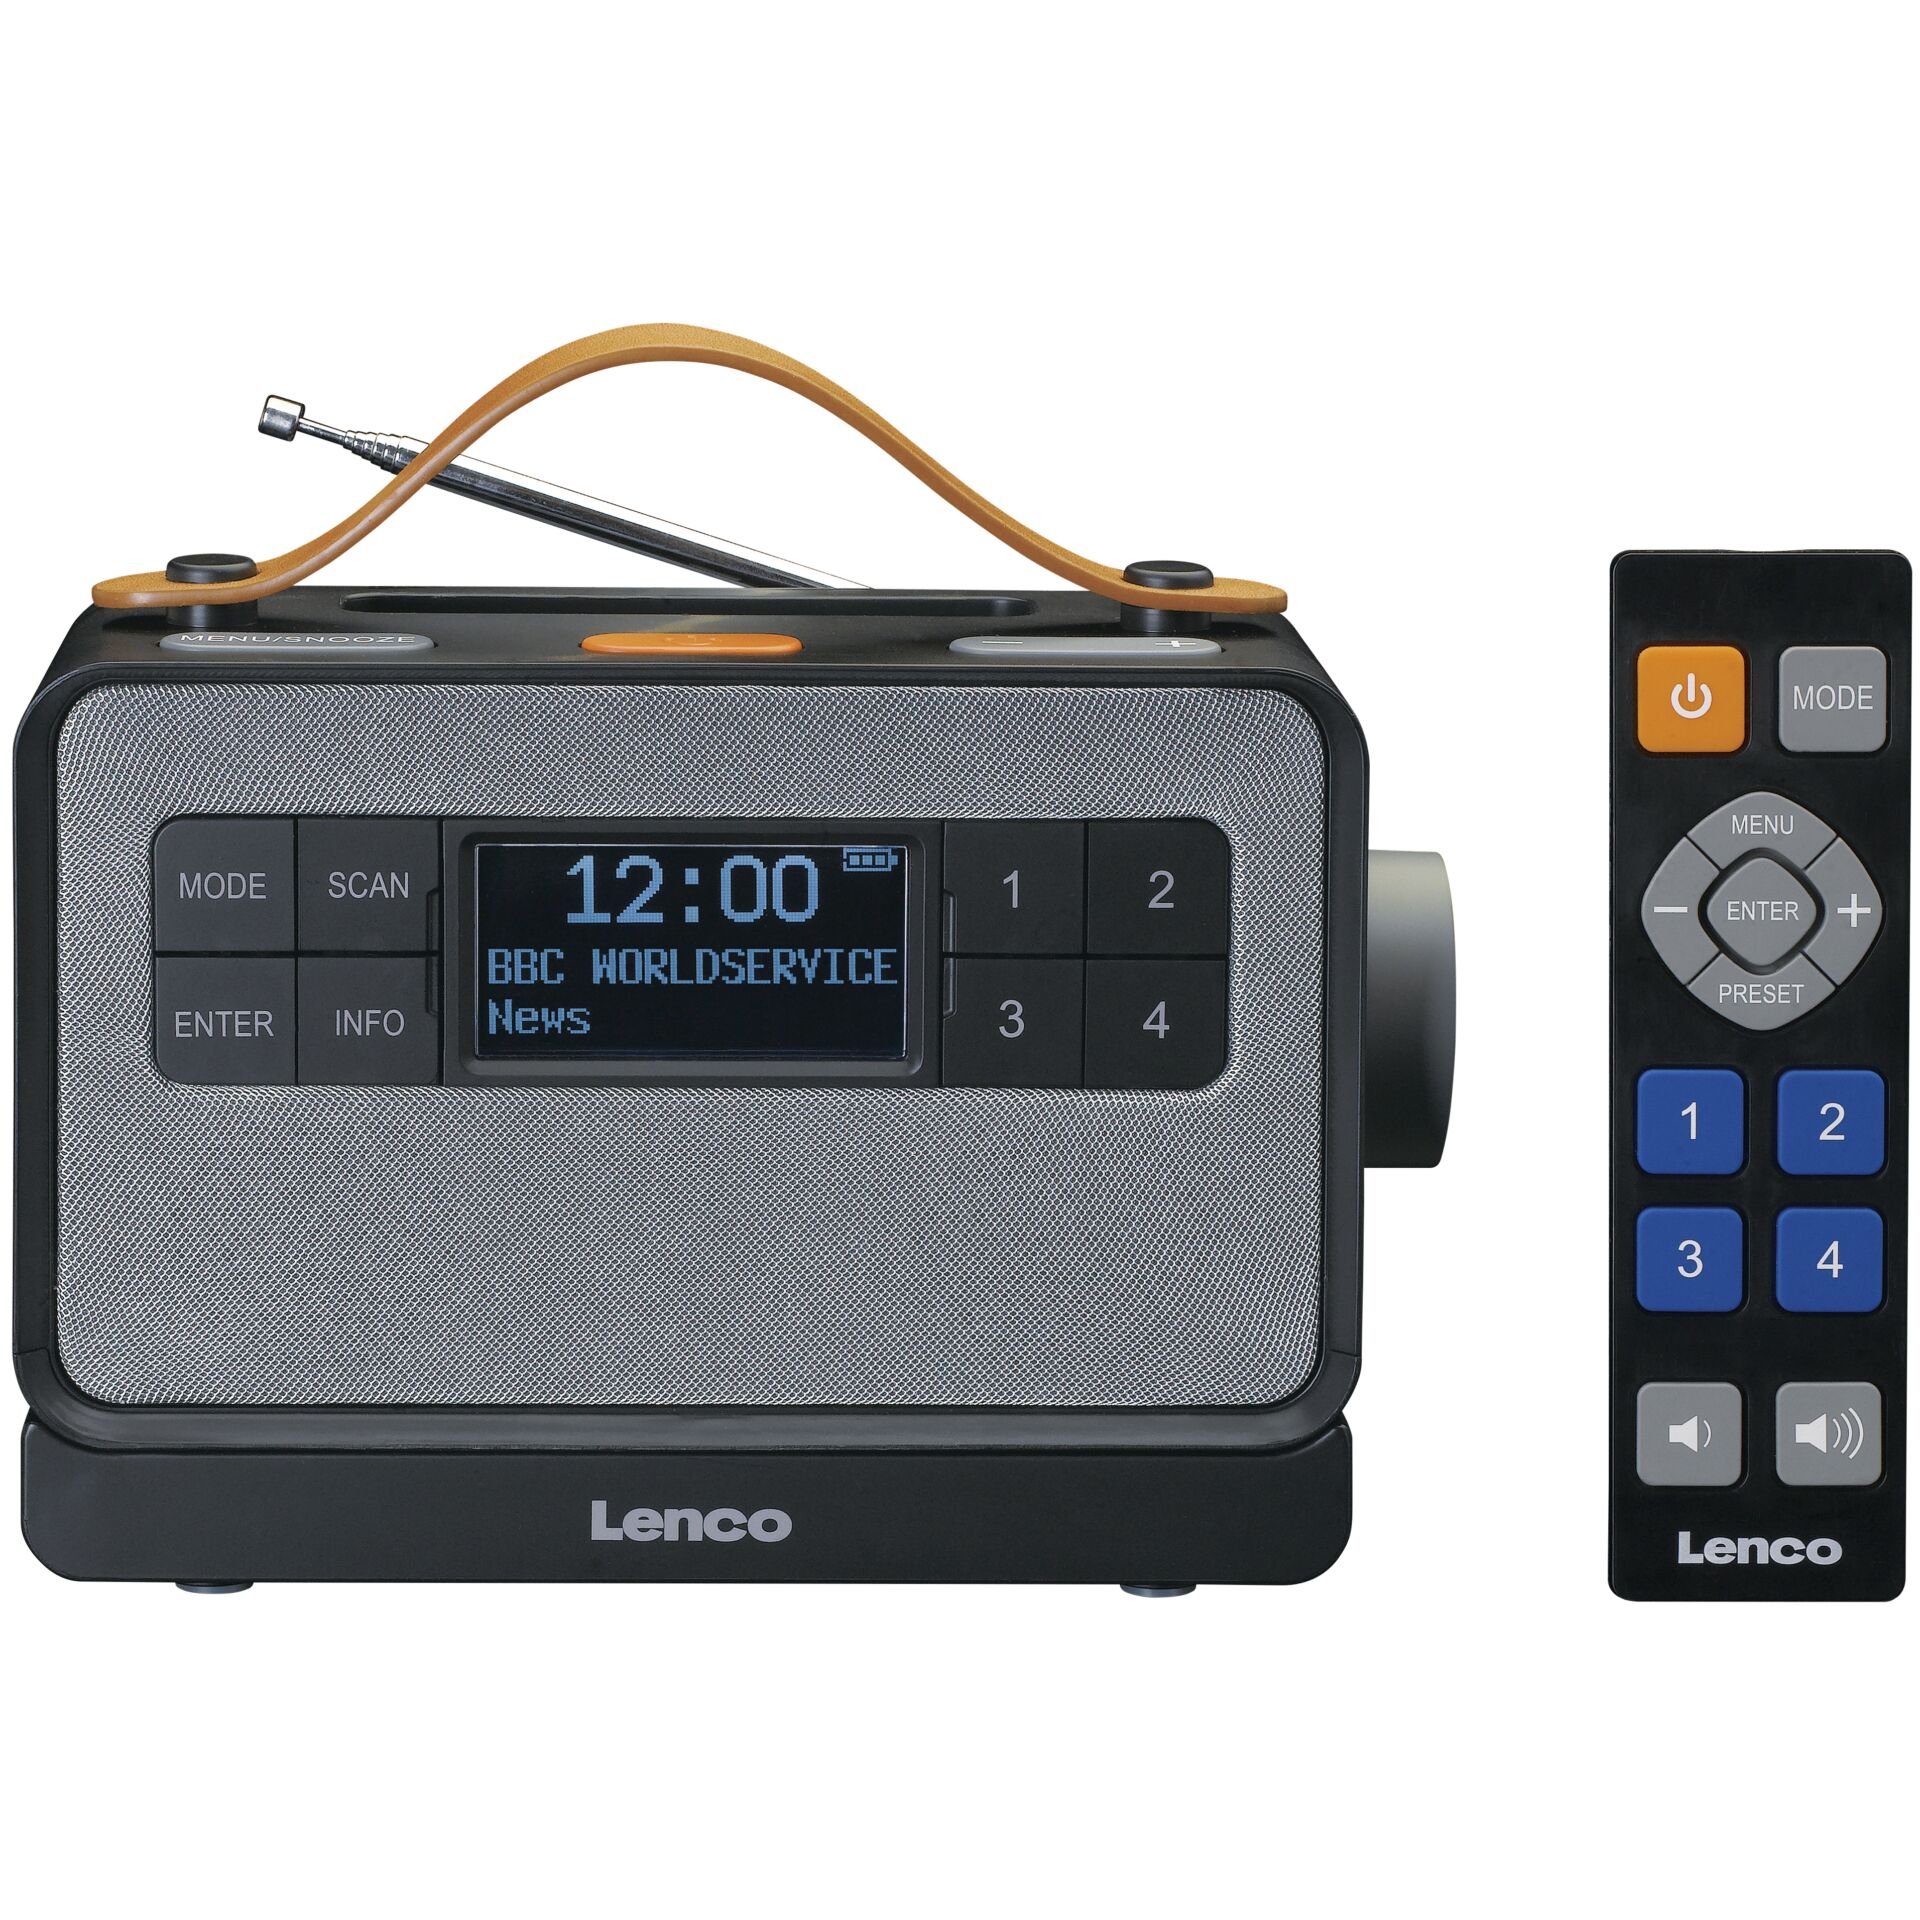 -PDR-065 (PDR-065BK) schwarz -Lenco Lenco Hardware/Electronic